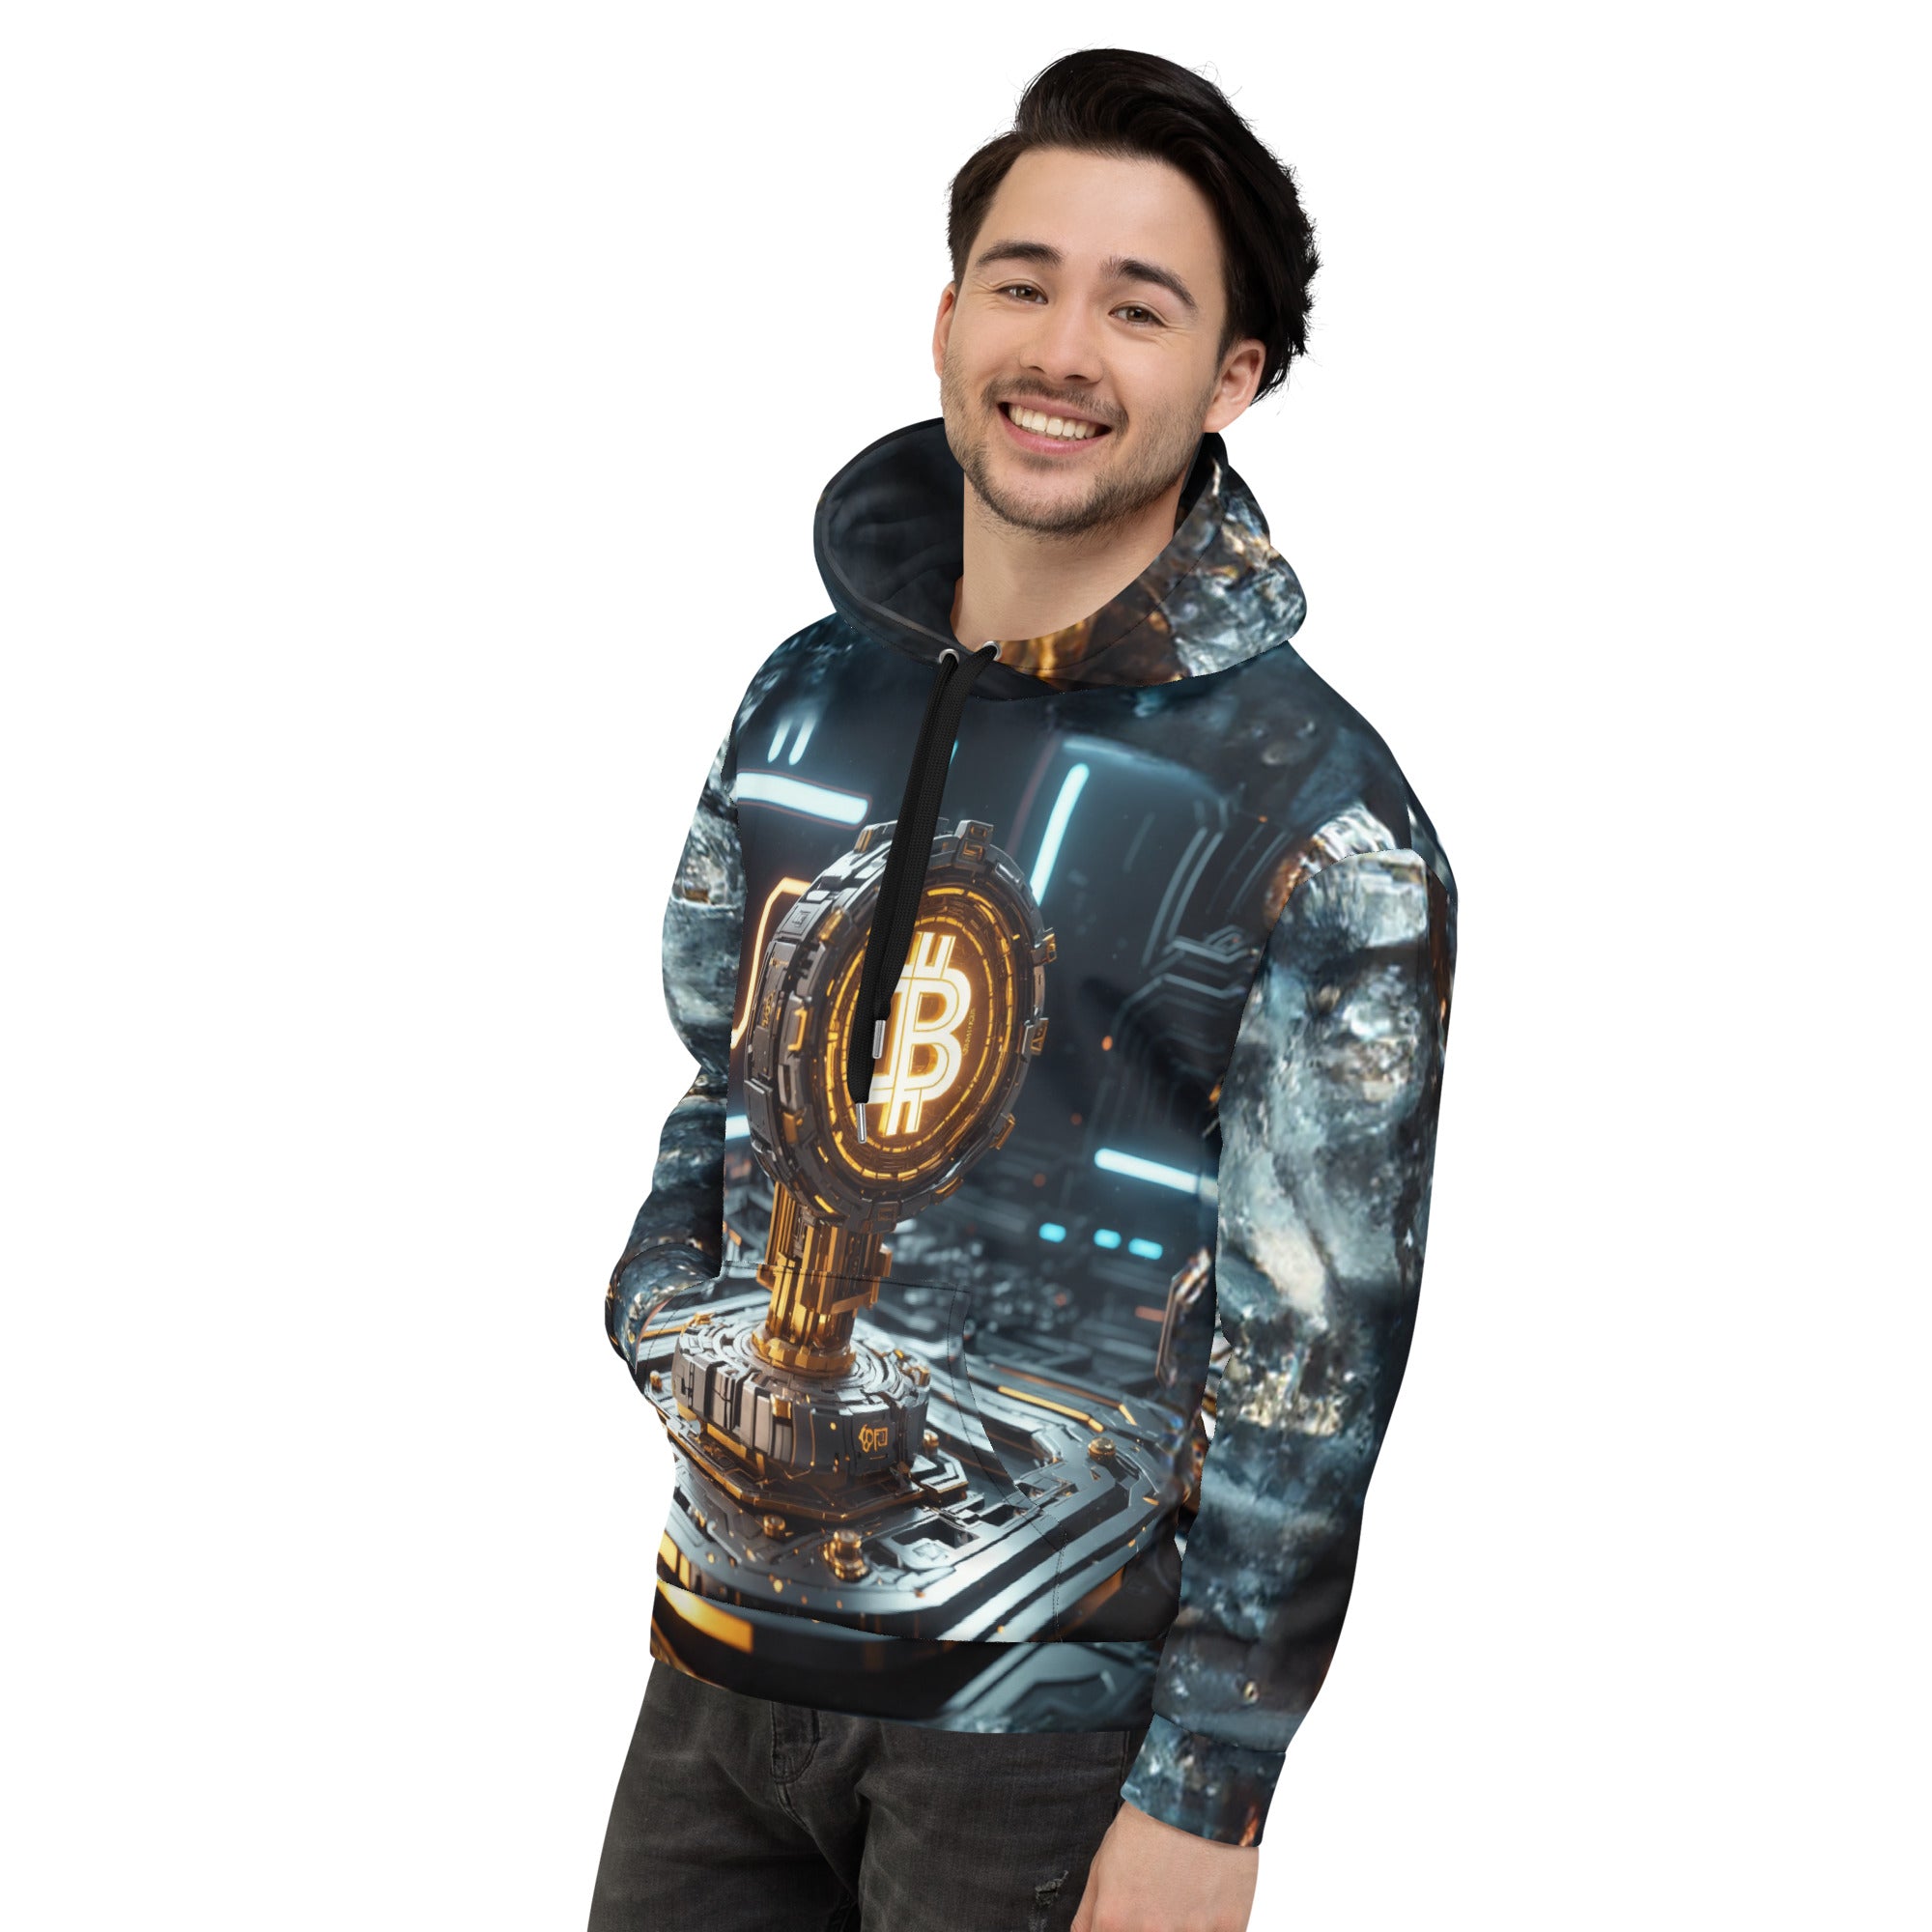 Futuristic Bitcoin Microchip BTC Symbol Unisex Hoodie Sweatshirt